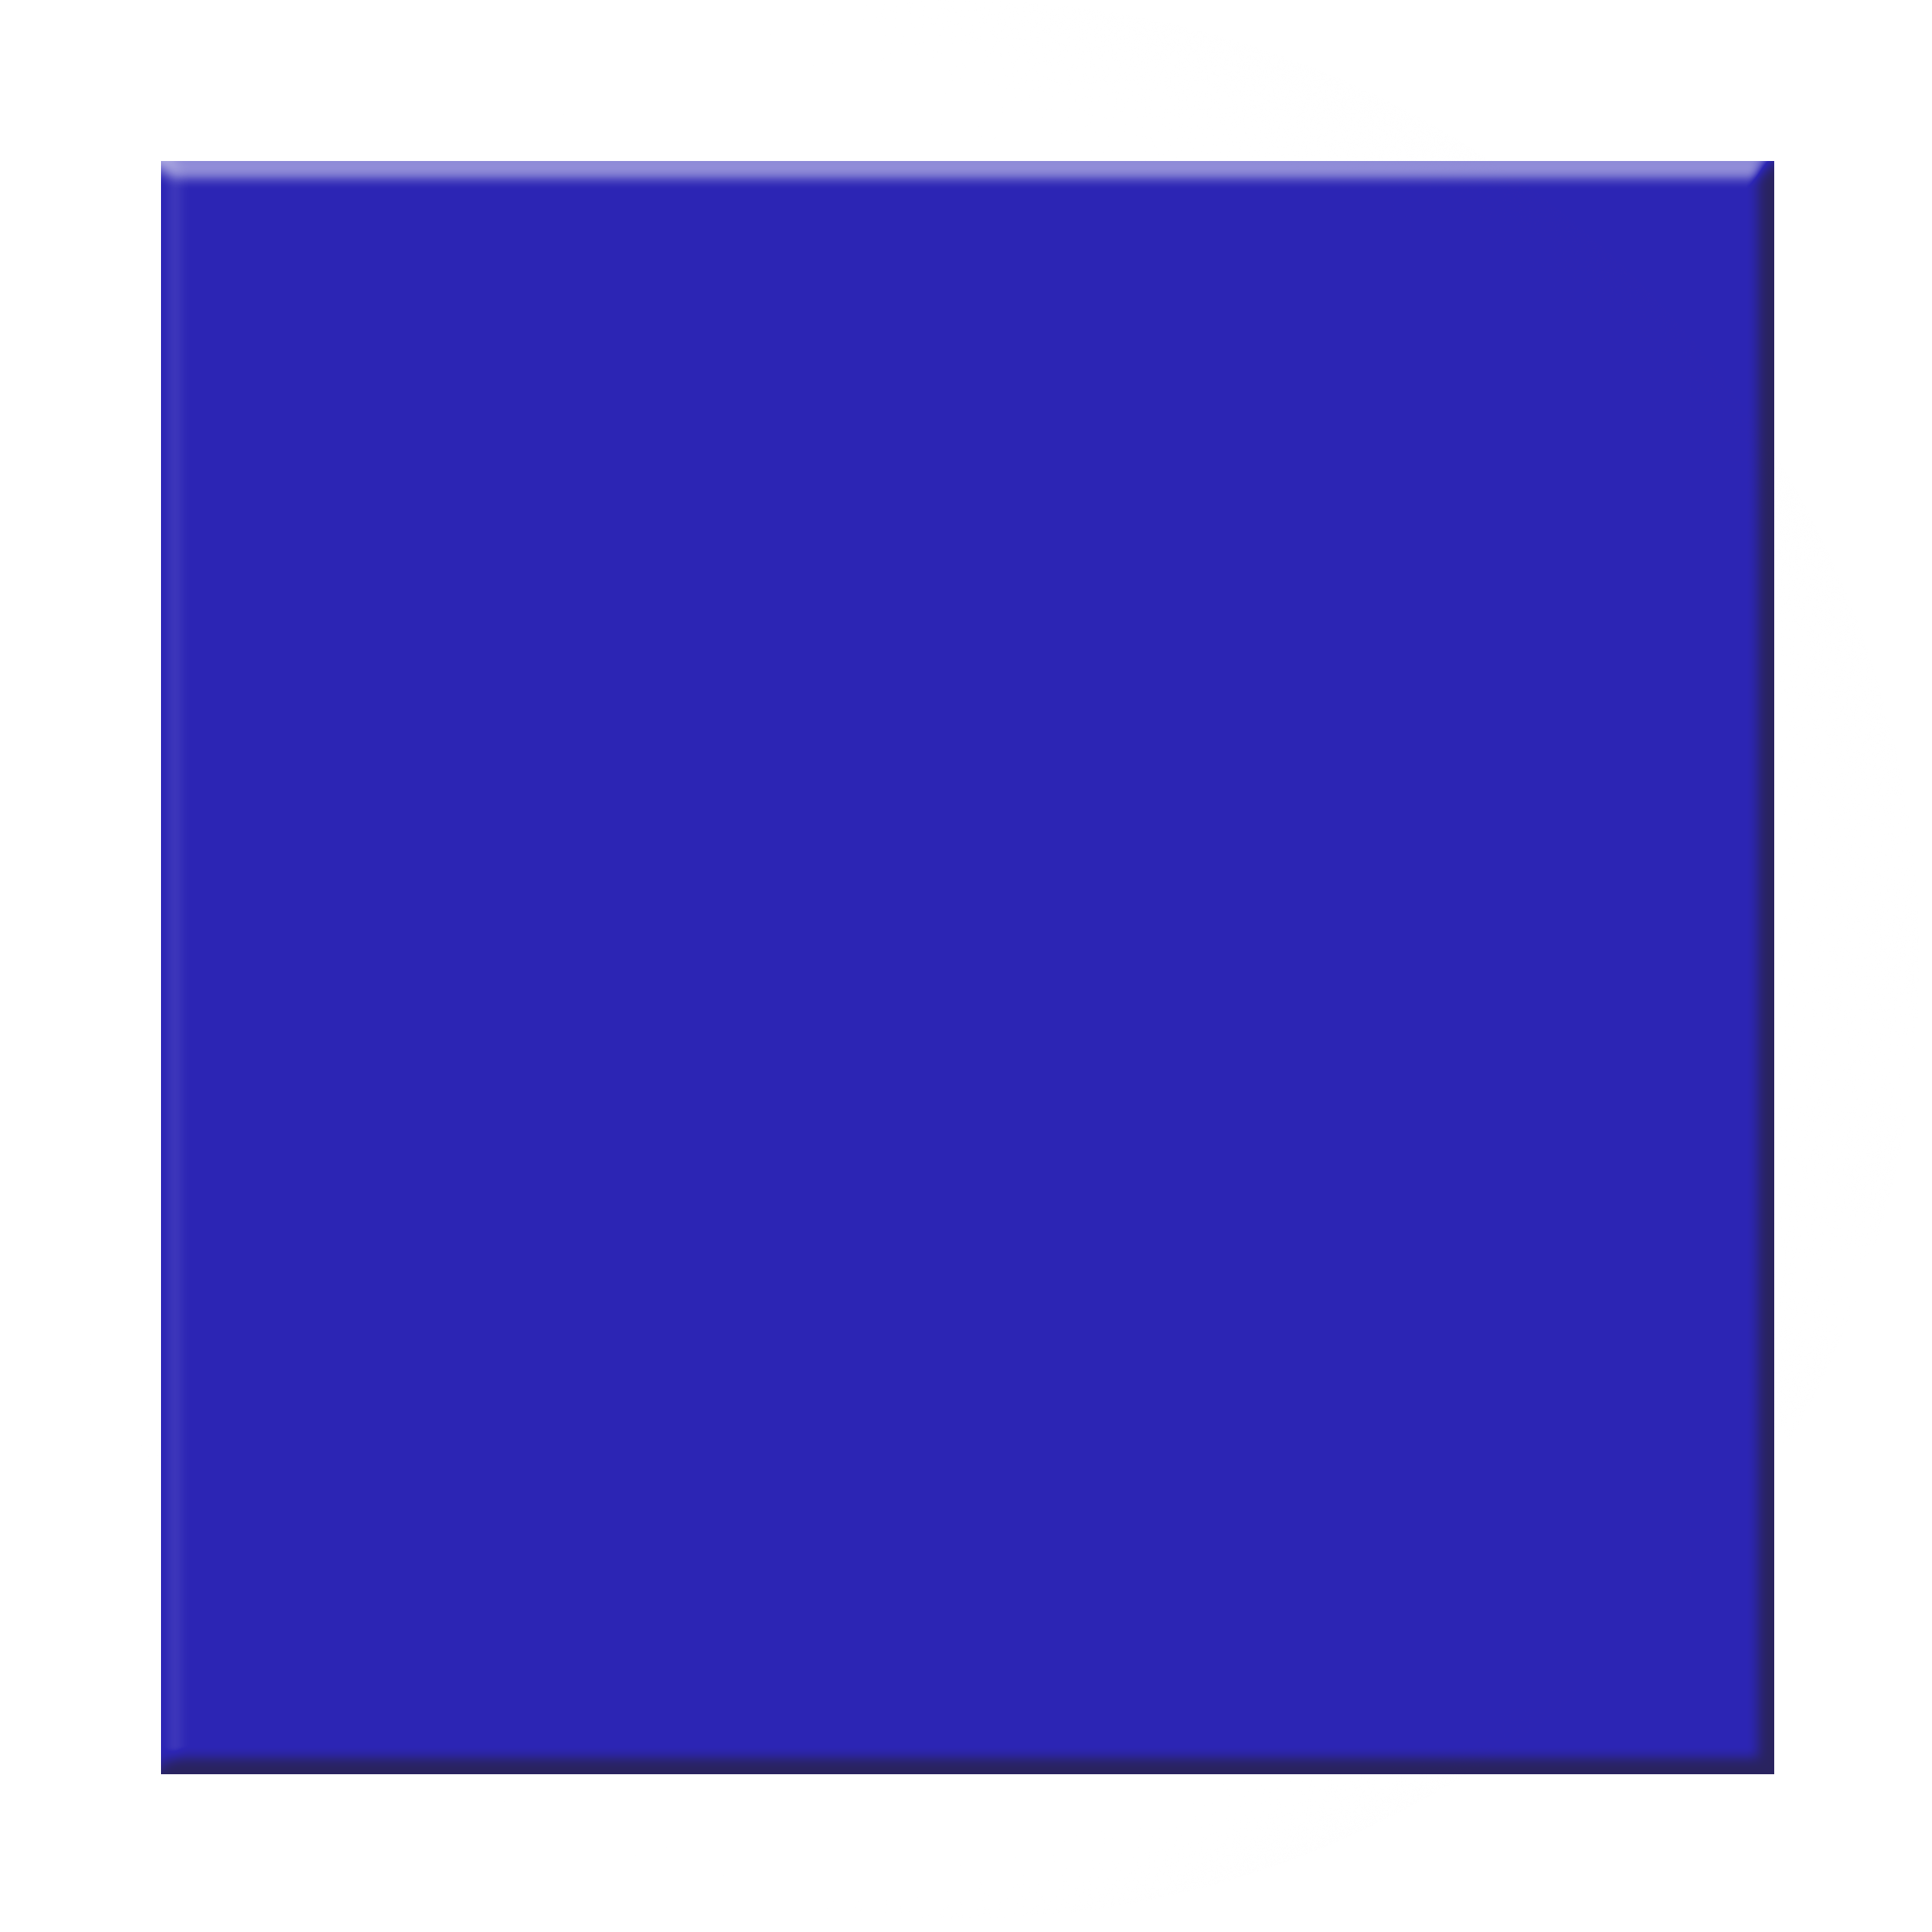 Blue Square   Free Images At Clker Com   Vector Clip Art Online